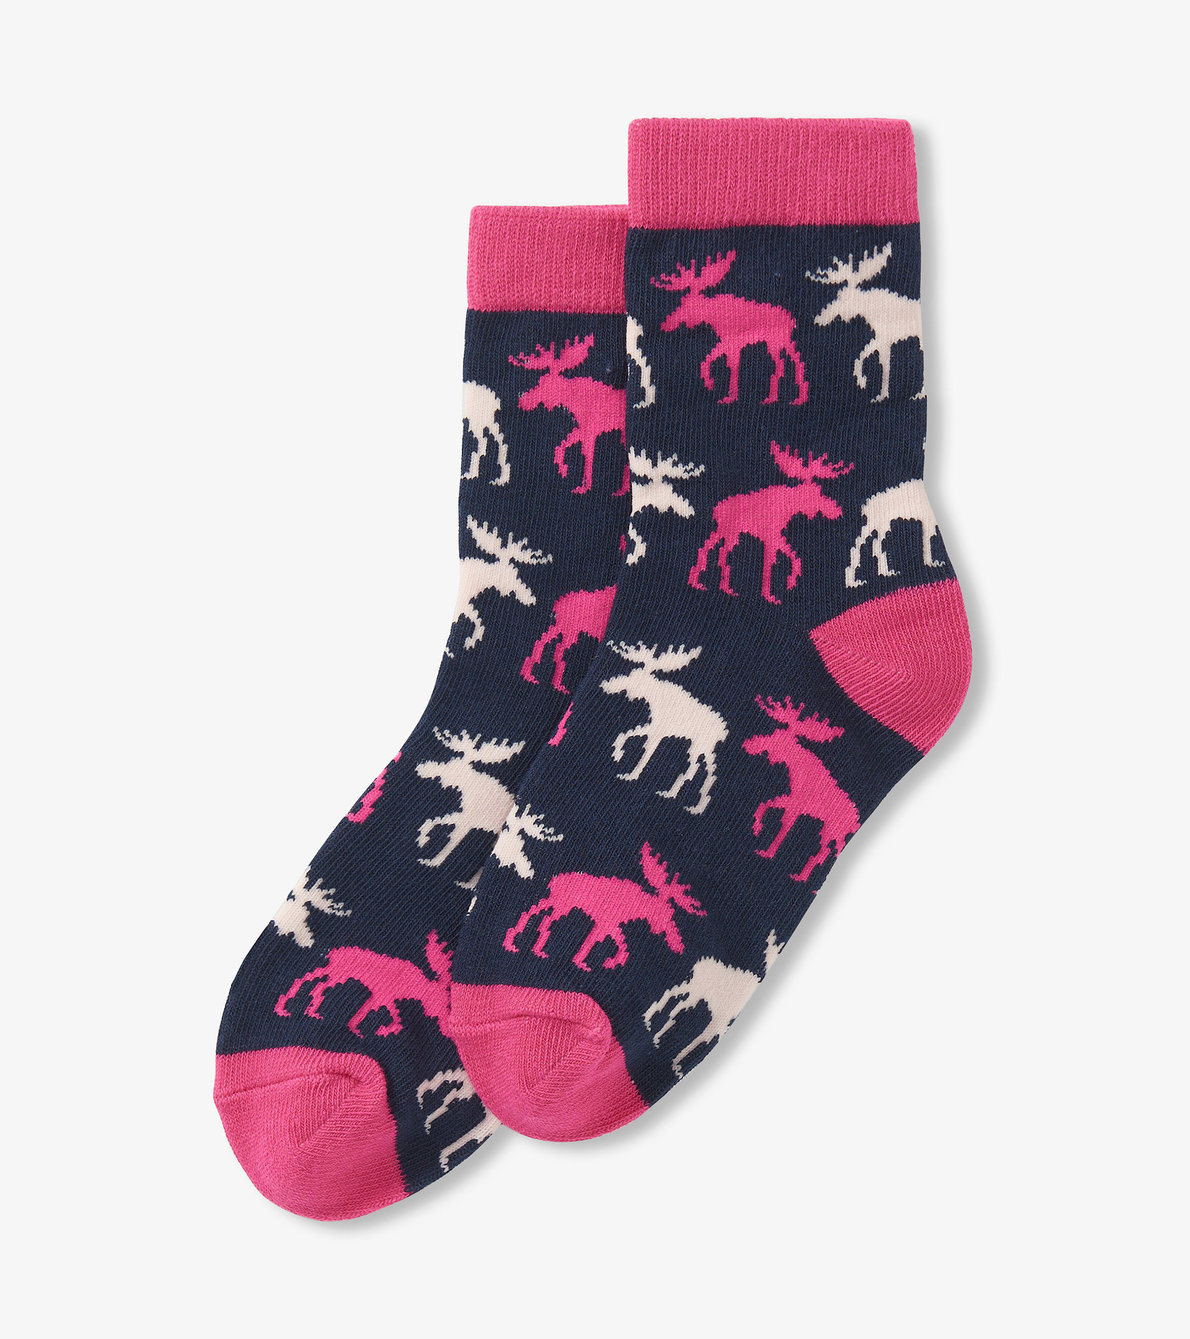 View larger image of Raspberry Moose Kids Crew Socks